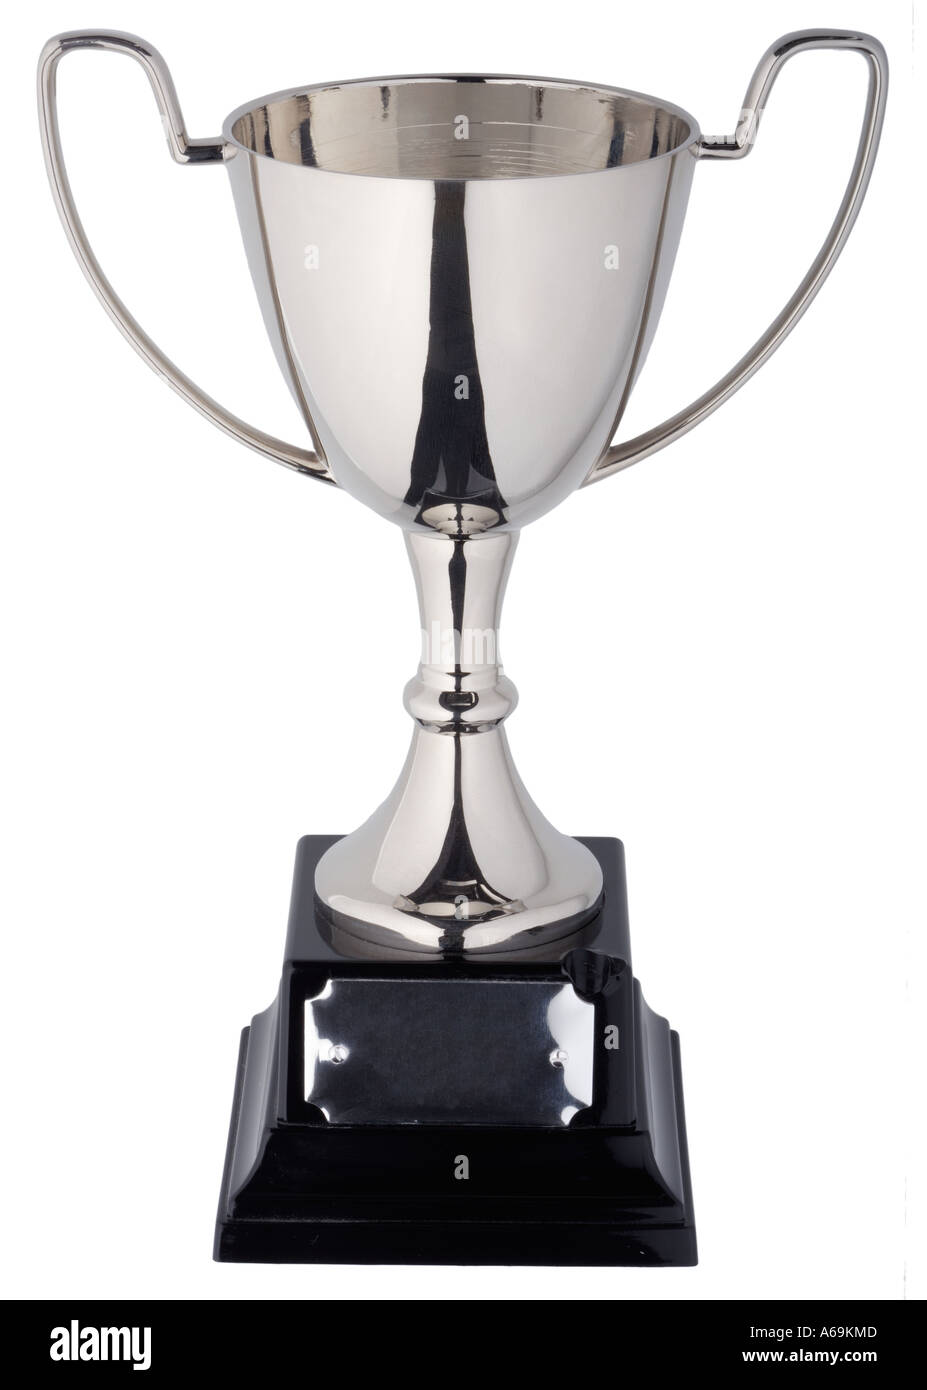 Premio Trofeo copa de plata con asas en un zócalo negro Foto de stock